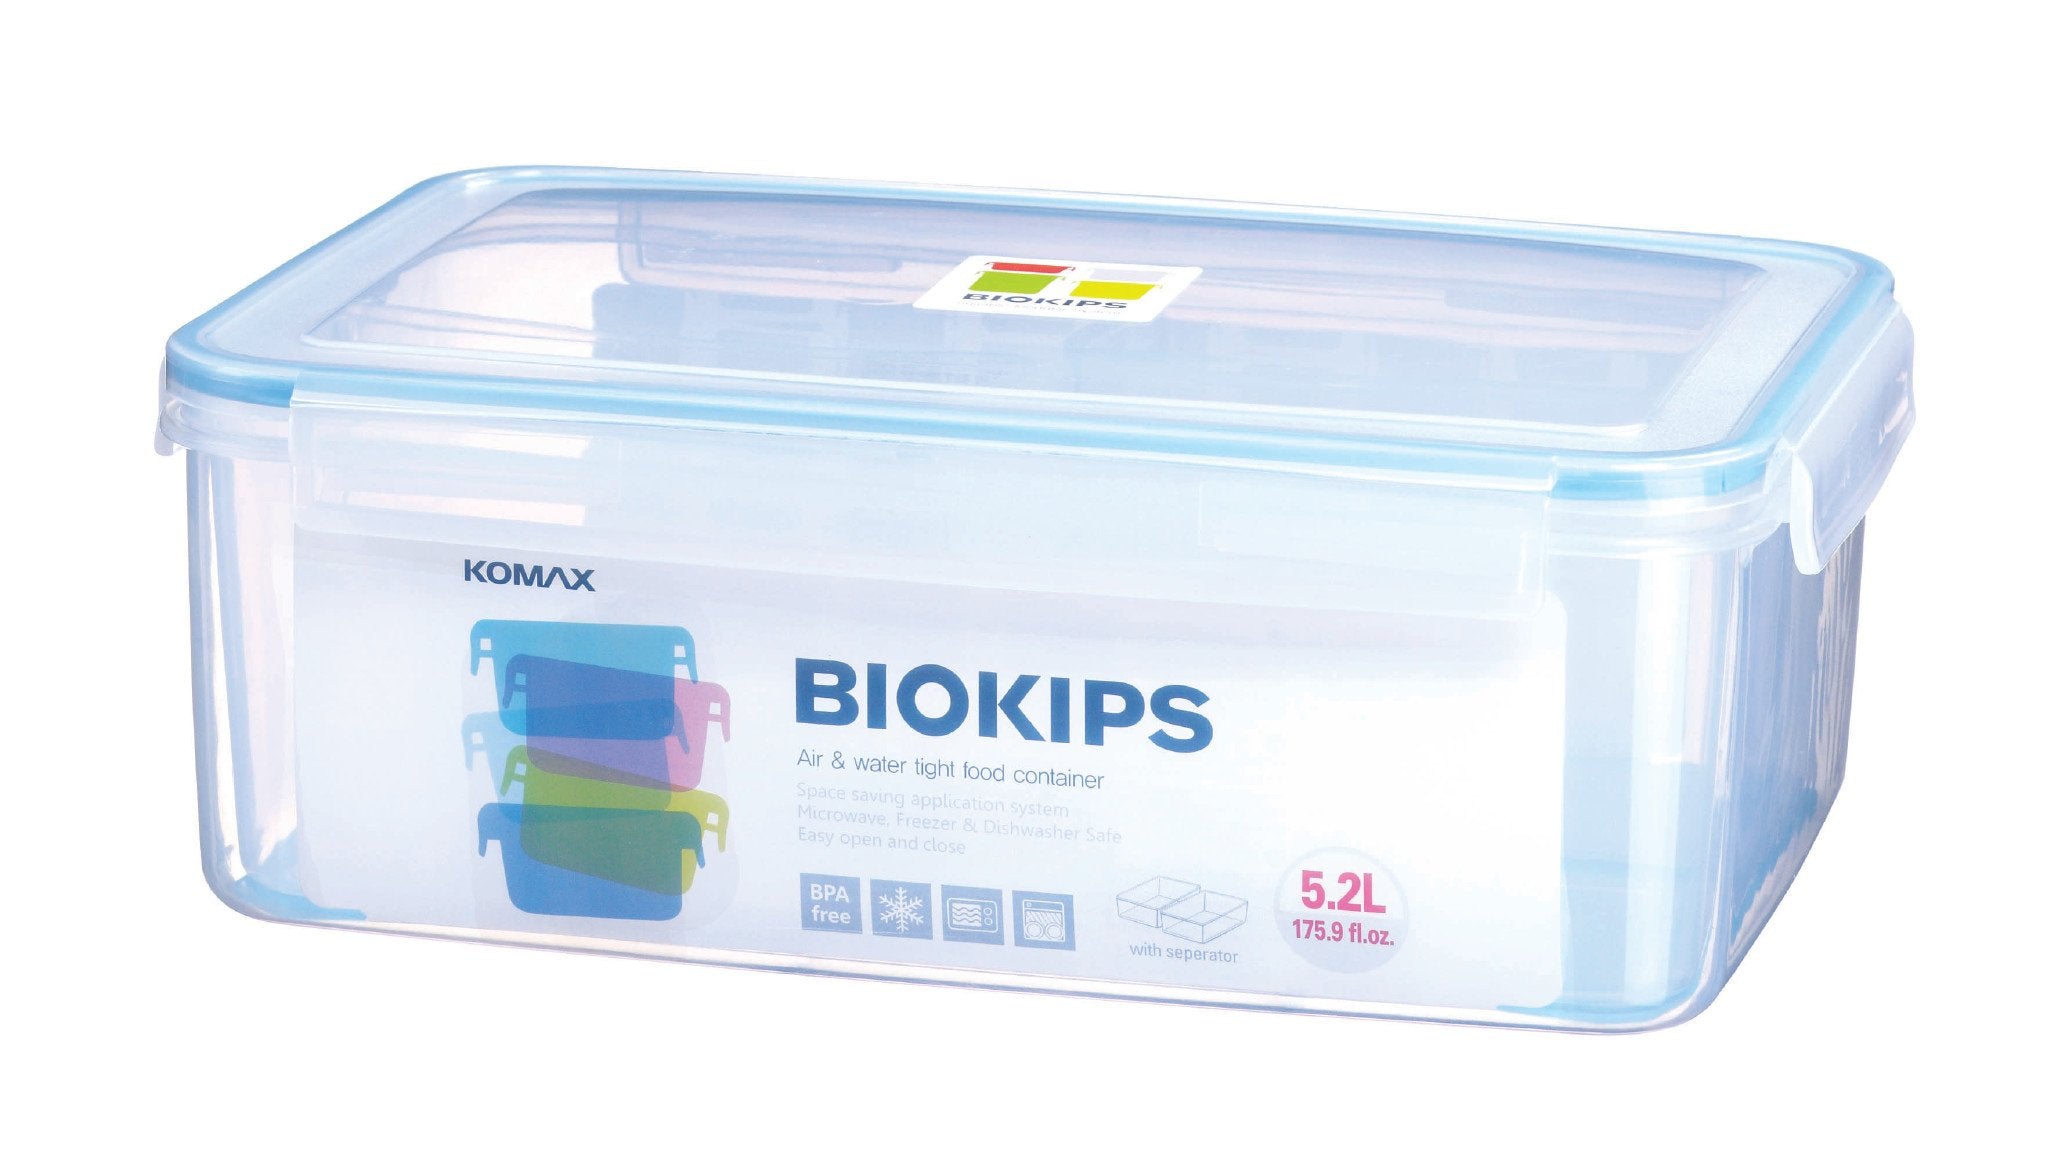 Komax Bioglass Rectangular Air & Water Tight Food Storage Container 1220ml  (41.2 fl.oz.) with decorative blue lid - GetStorganized